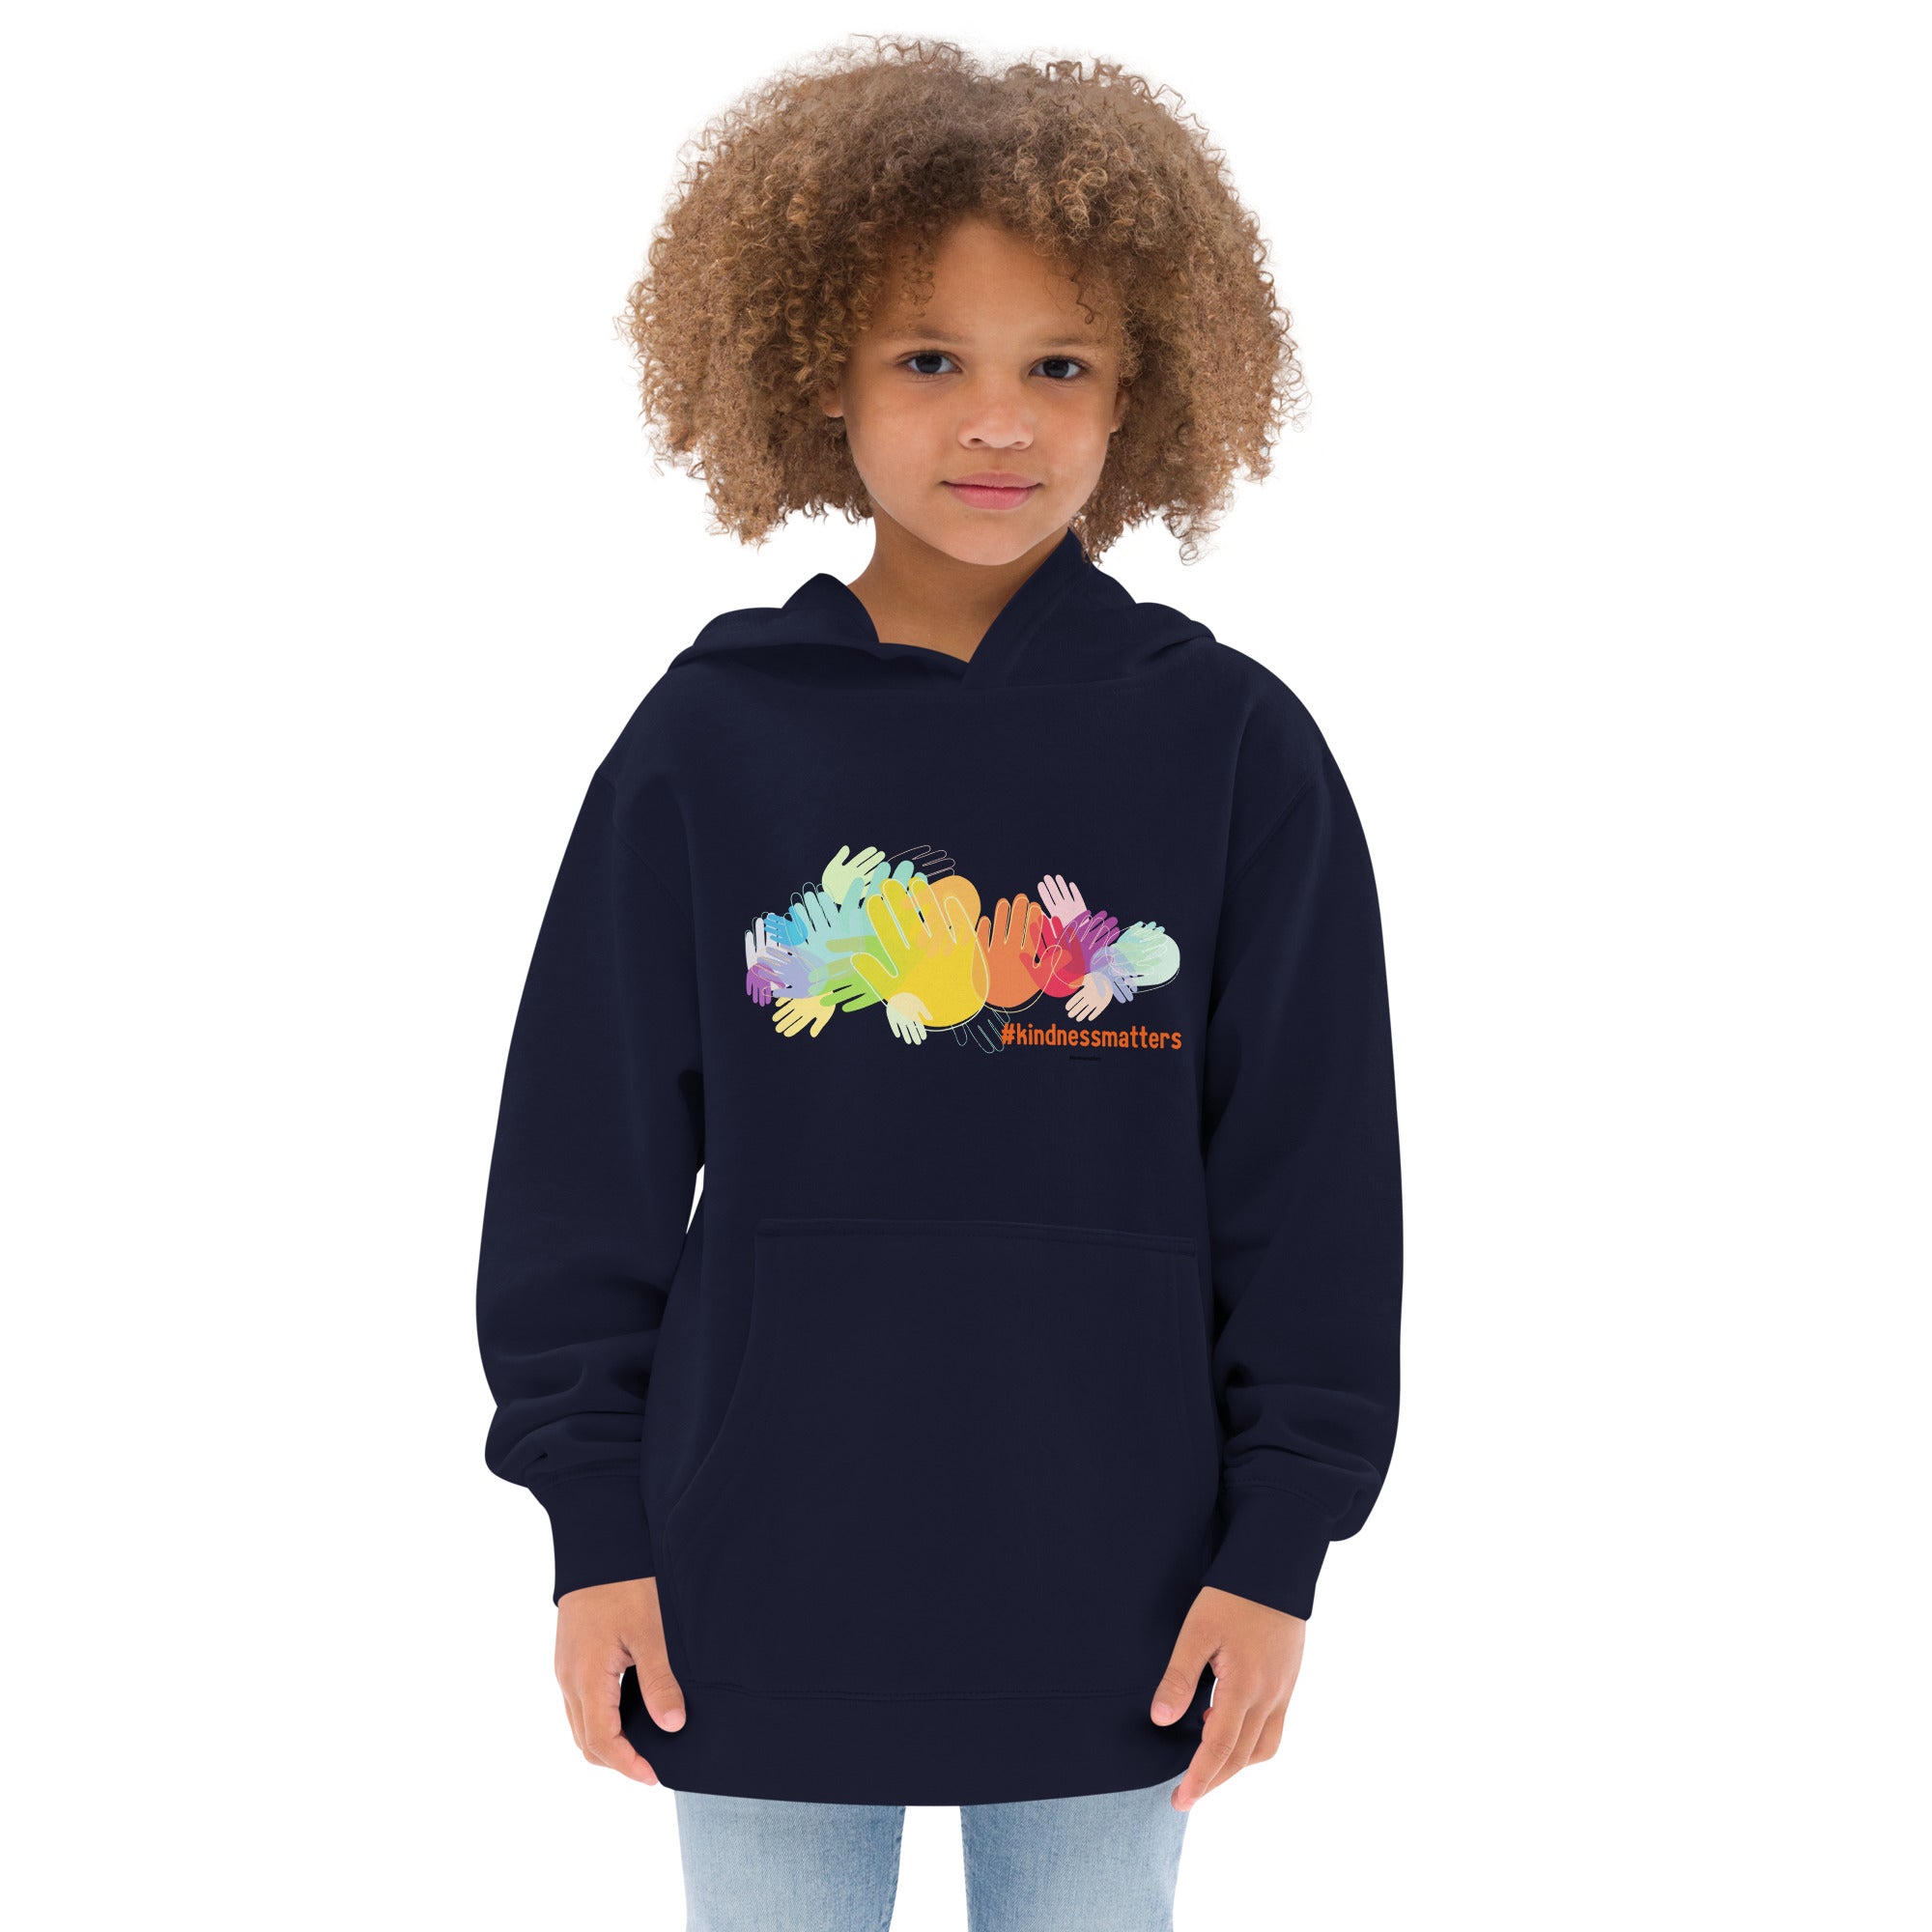 Kindness matters - Kids fleece hoodie